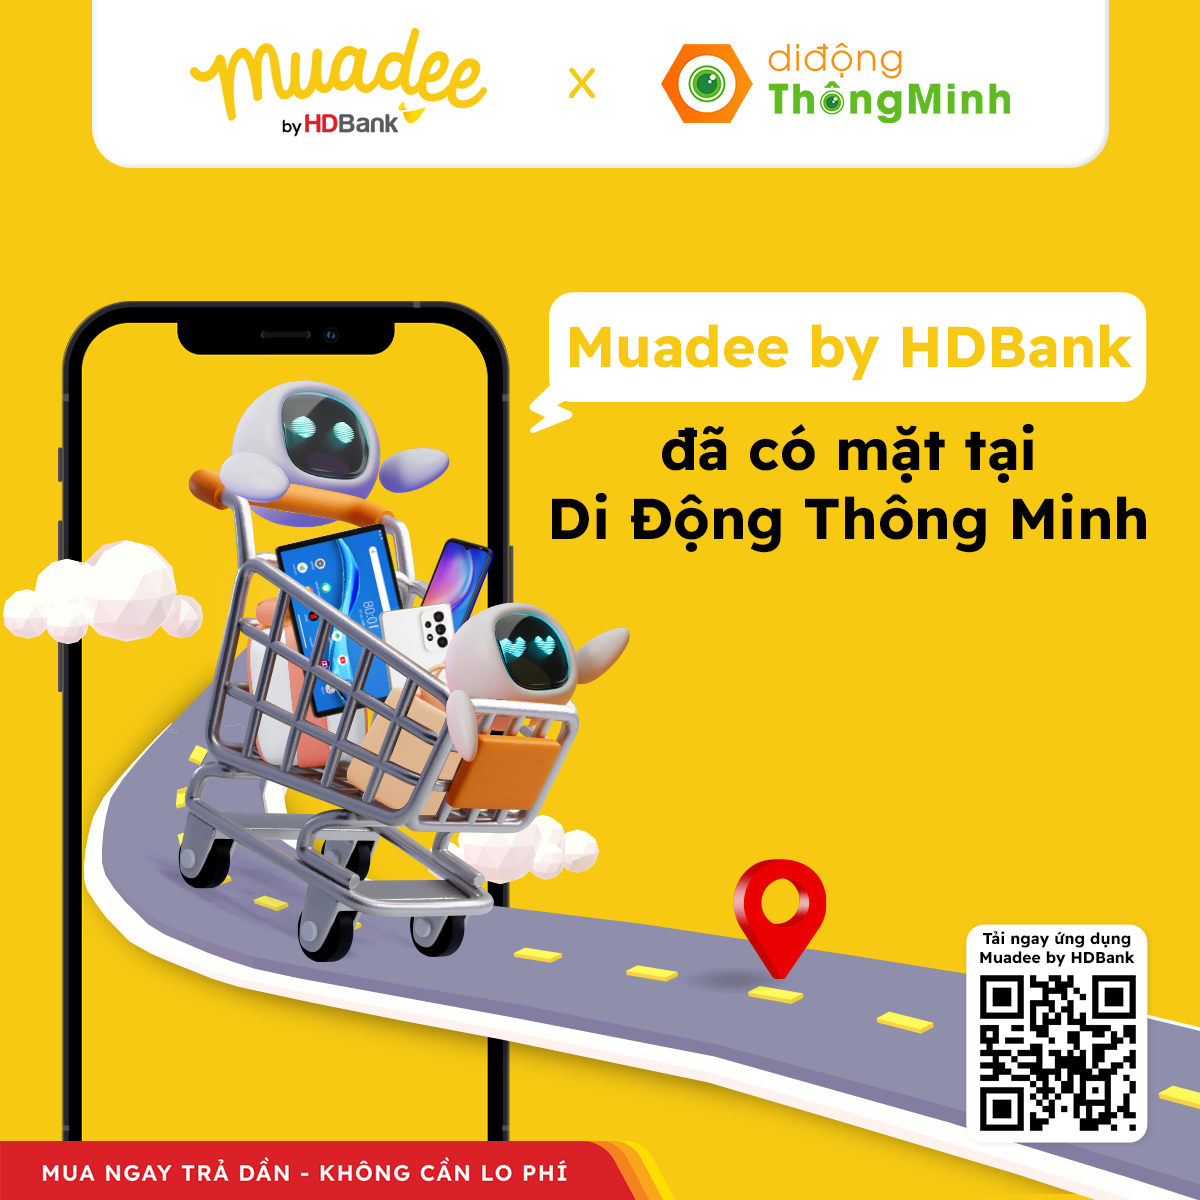 Muadee-by-HDBank-hop-tac-voi-Di-Dong-Thong-Minh